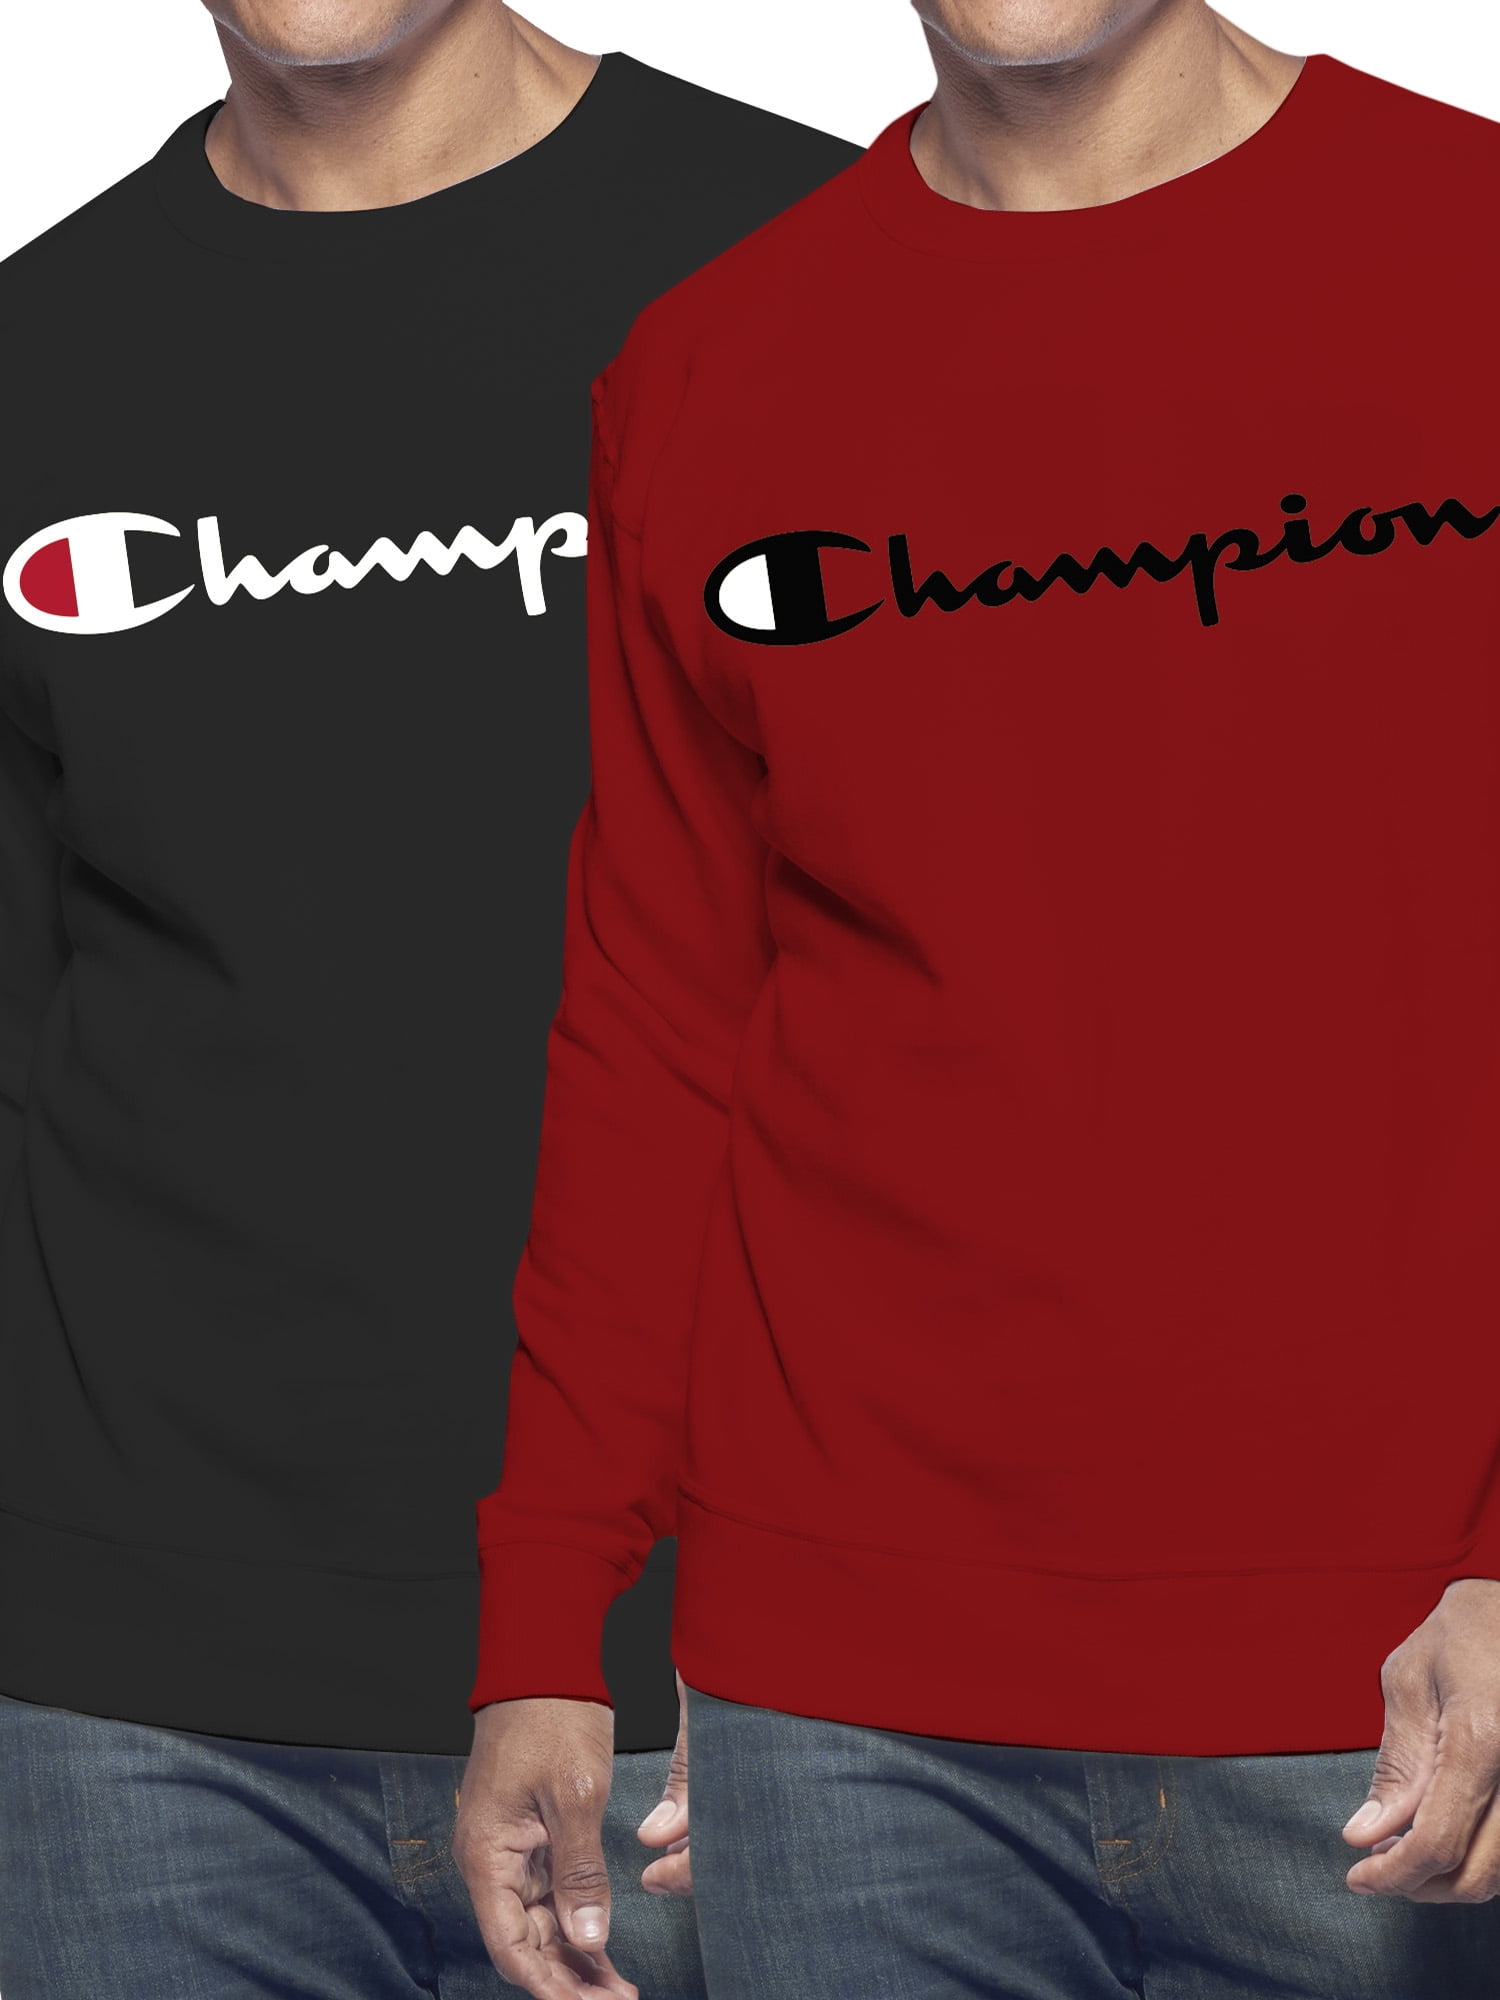 Champion - Champion Men's Big and Tall Classic Long Sleeve Graphic 2 Pack Sizes LT to 6X - Walmart.com - Walmart.com